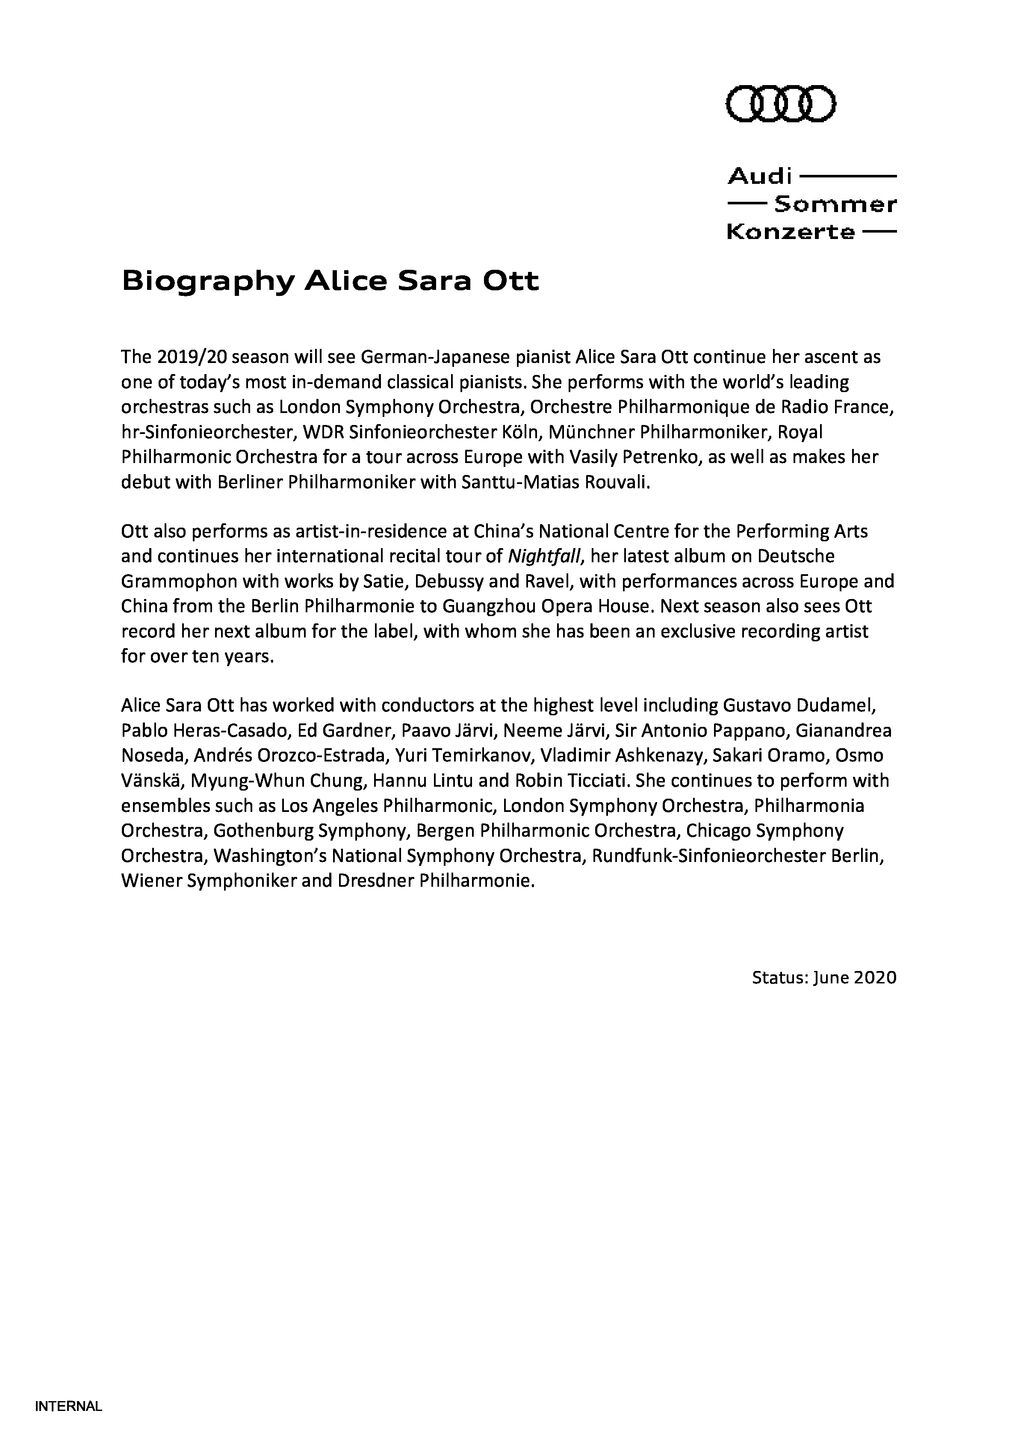 Biography Alice Sara Ott